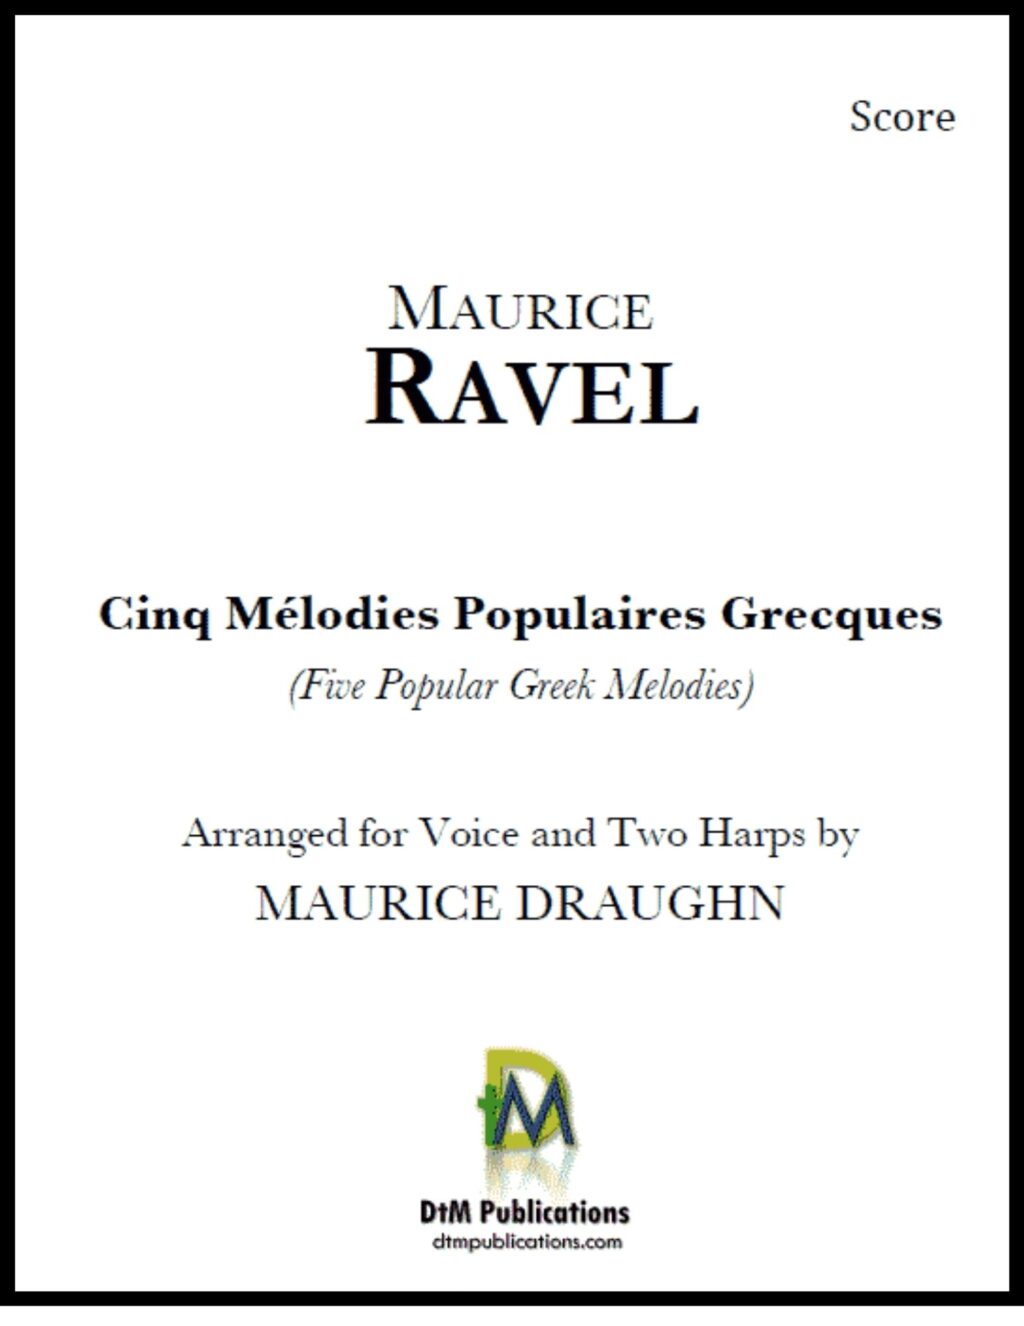 Cinq Melodies Populaires Grecques by Ravel (Arr. Draughn) Cover at folkharp.com